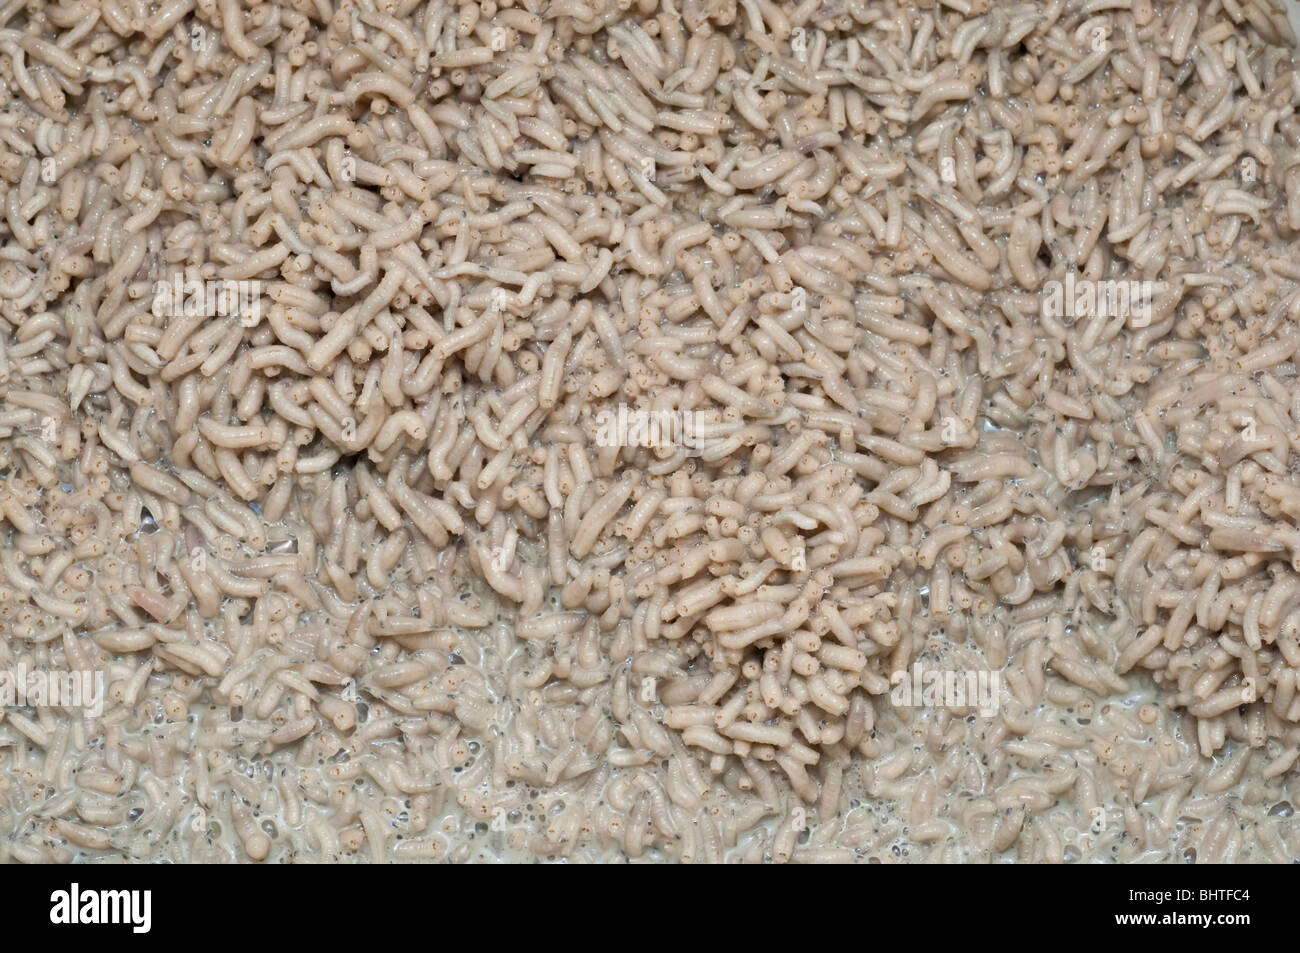 Blowfly maggots, Calliphora vicina, Sandstone, Minnesota, USA Stock Photo